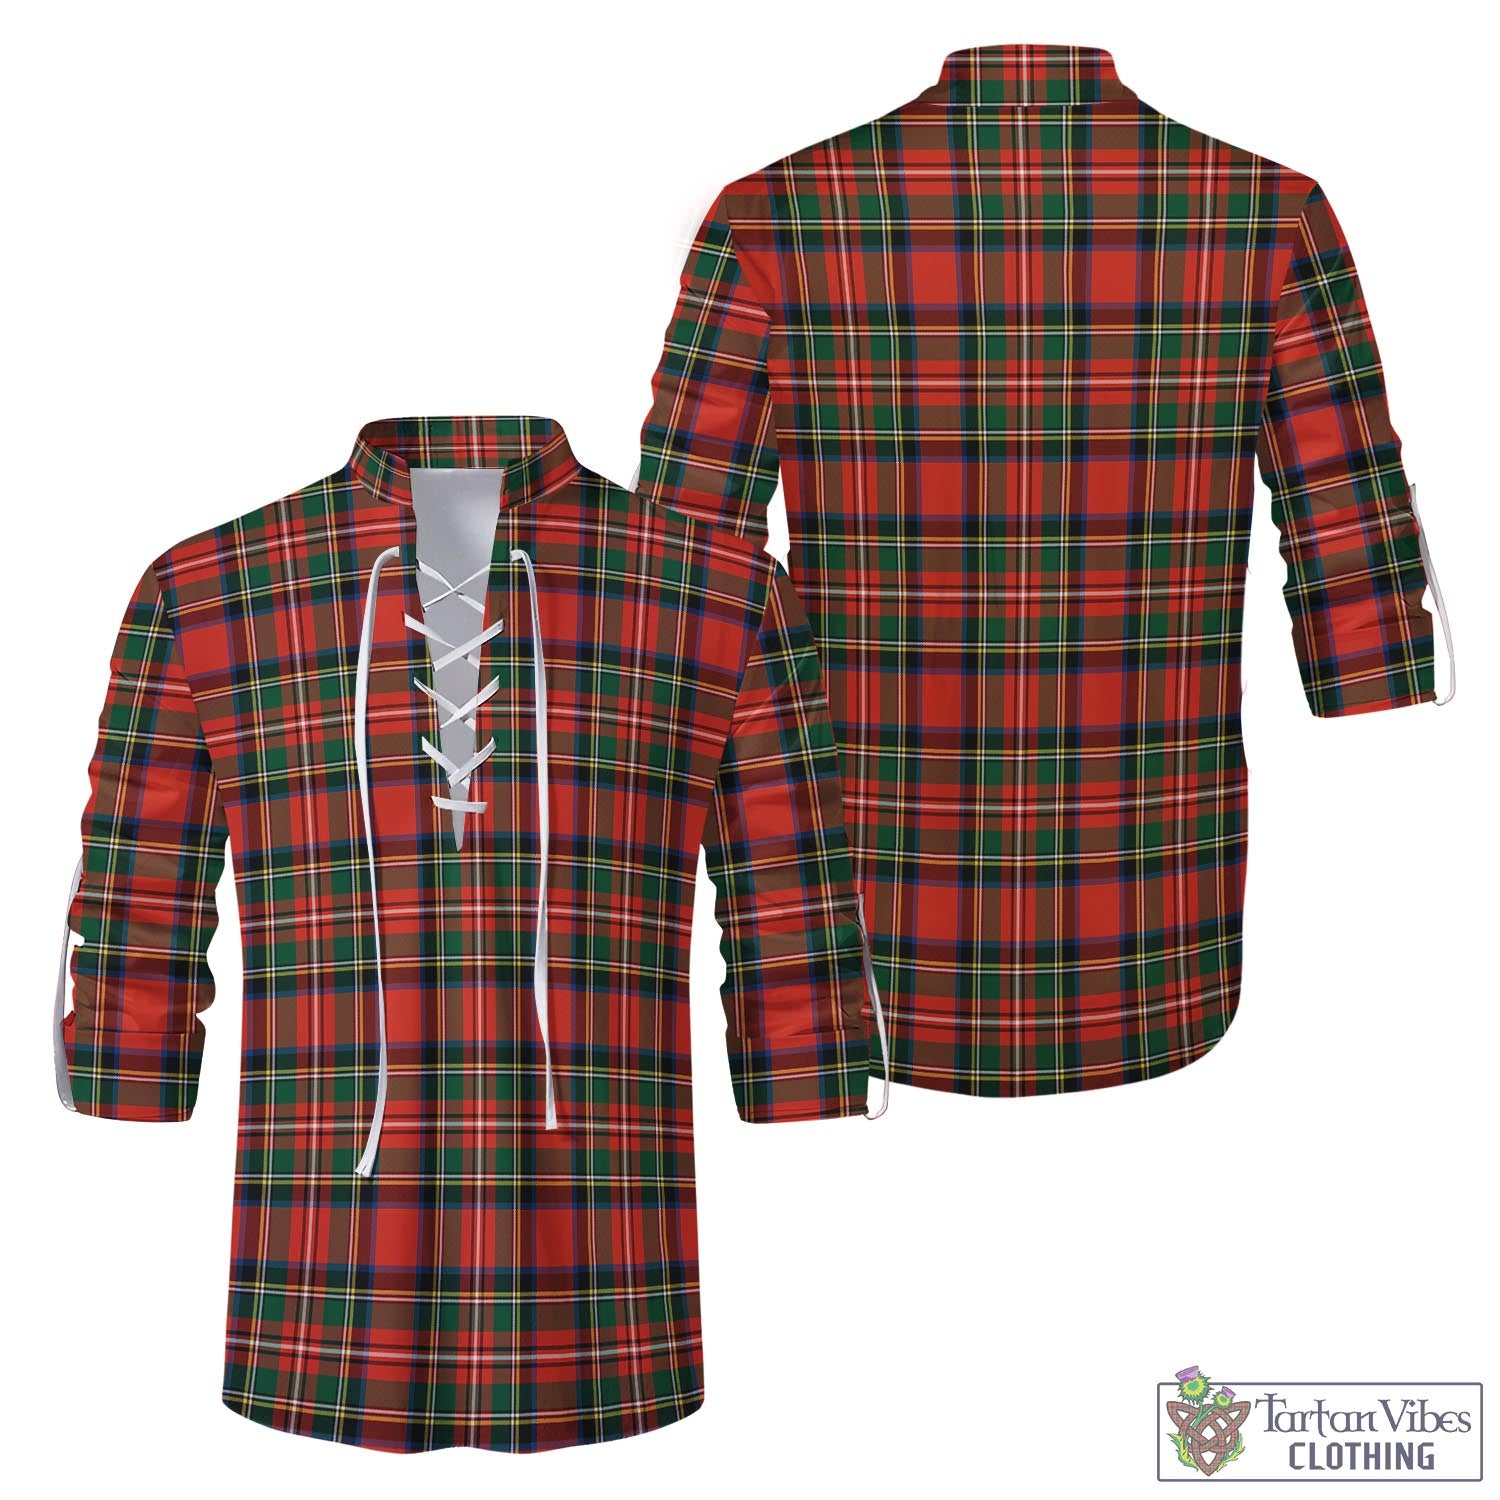 Tartan Vibes Clothing Lyle Tartan Men's Scottish Traditional Jacobite Ghillie Kilt Shirt